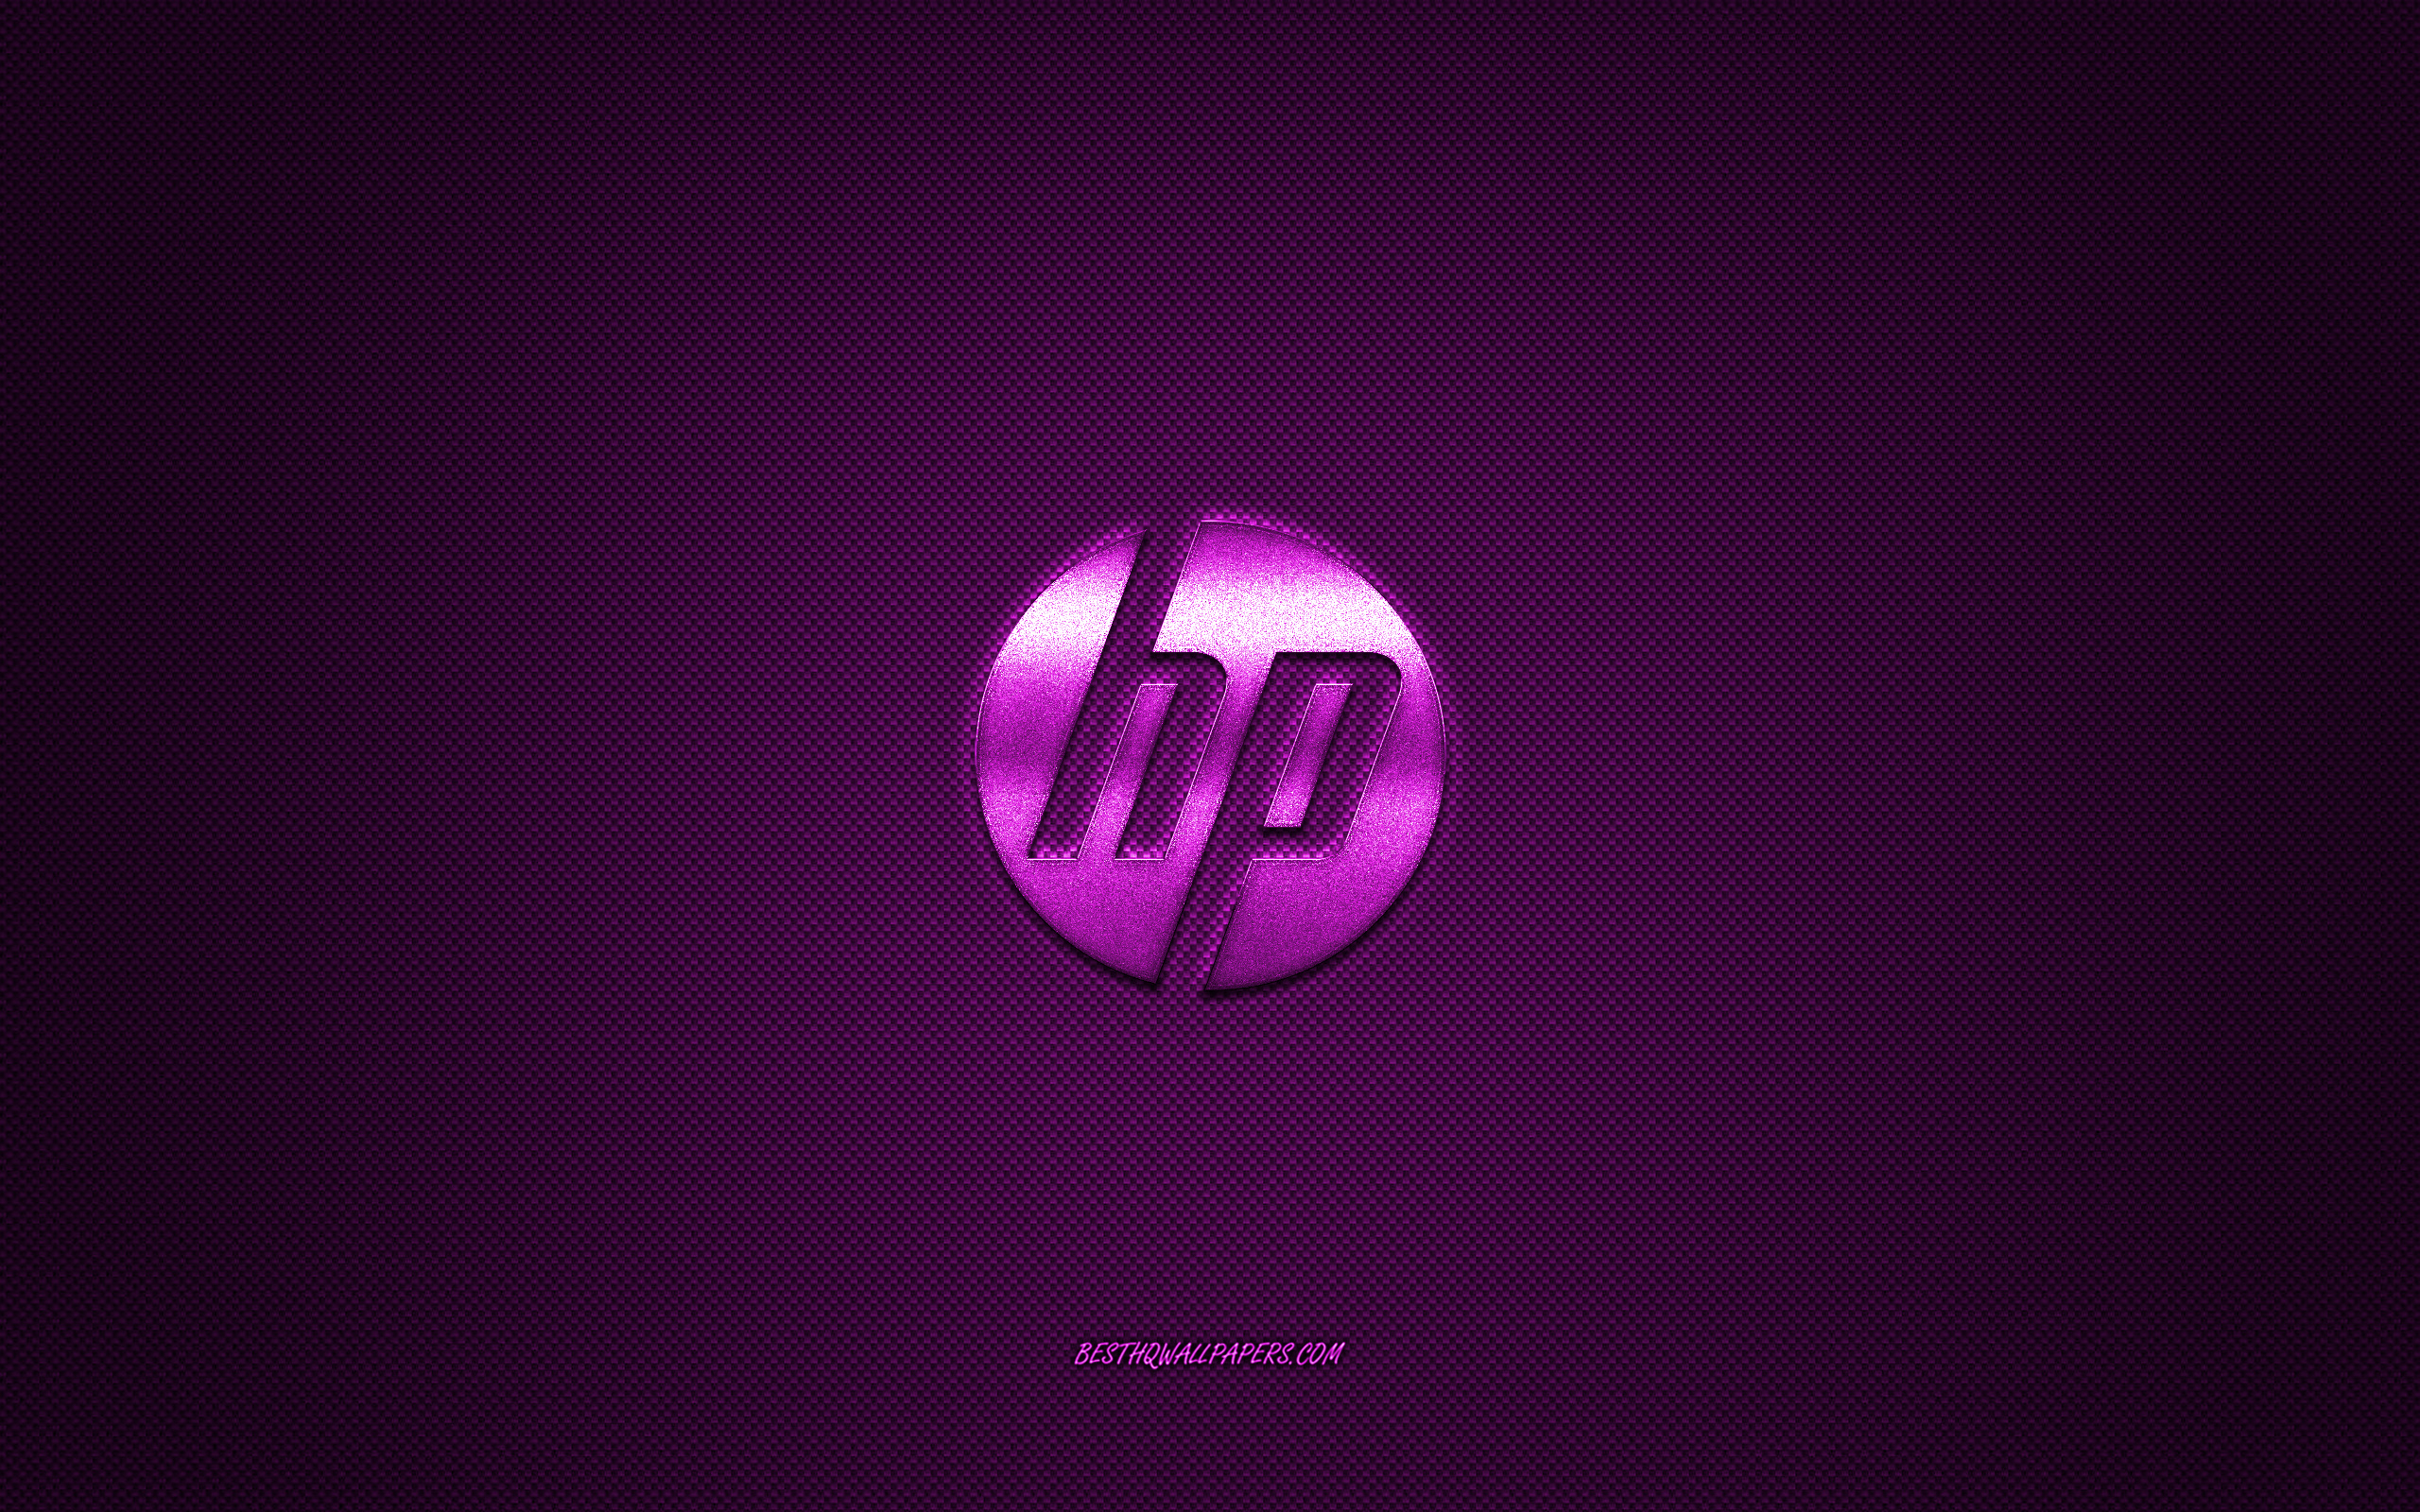 sony fondos de pantalla hd 1080p,violeta,texto,fuente,púrpura,rosado